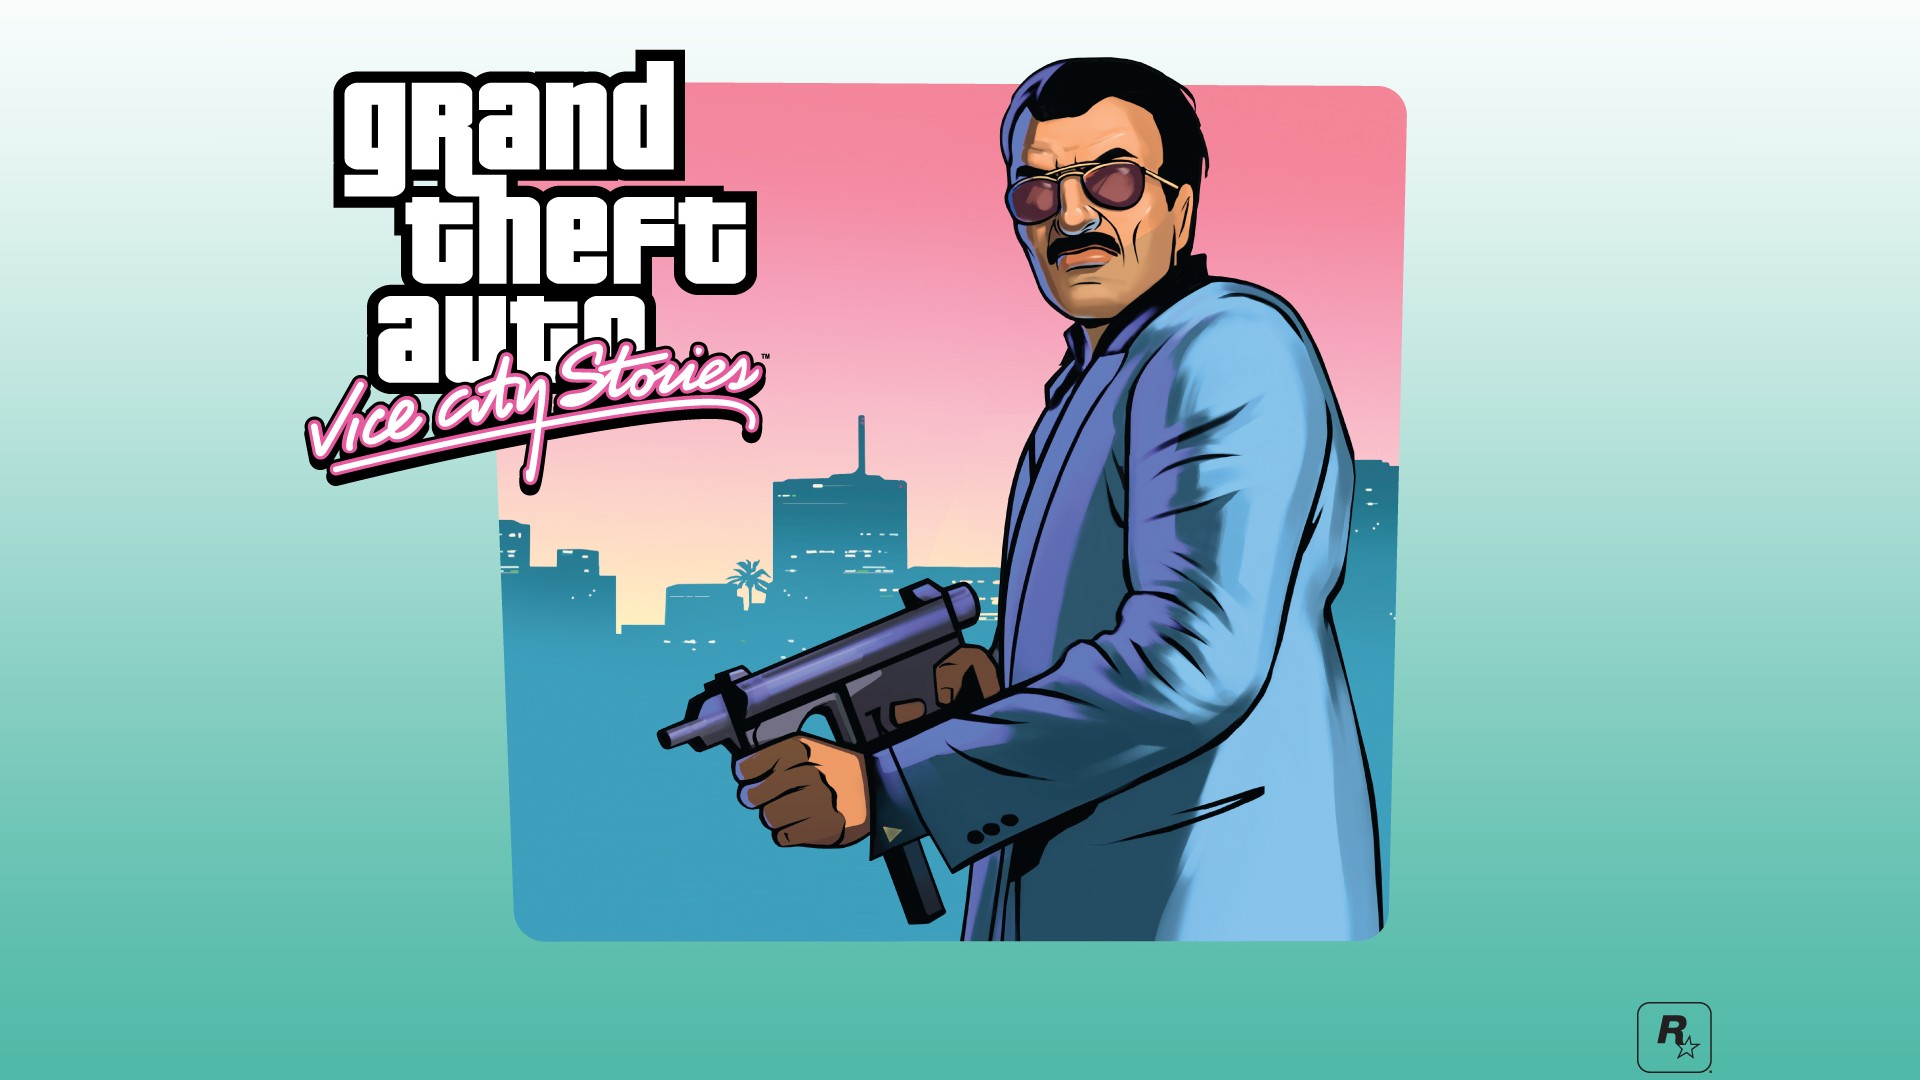 Grand Theft auto vice City stories